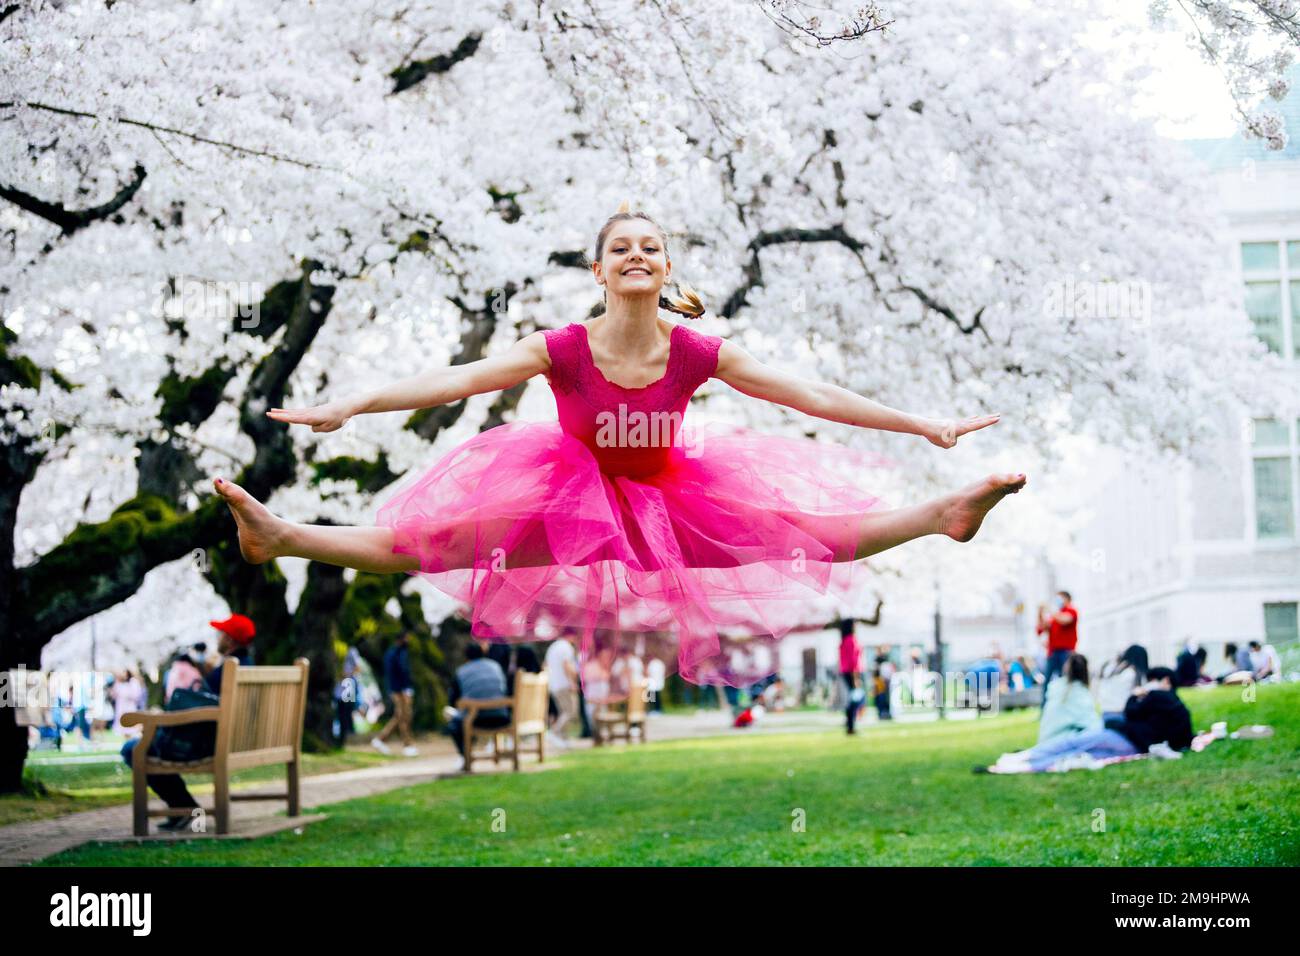 Acrobat in pink dress jumping under cherry blossom in park, University of Washington, Seattle, Washington State, USA Stock Photo